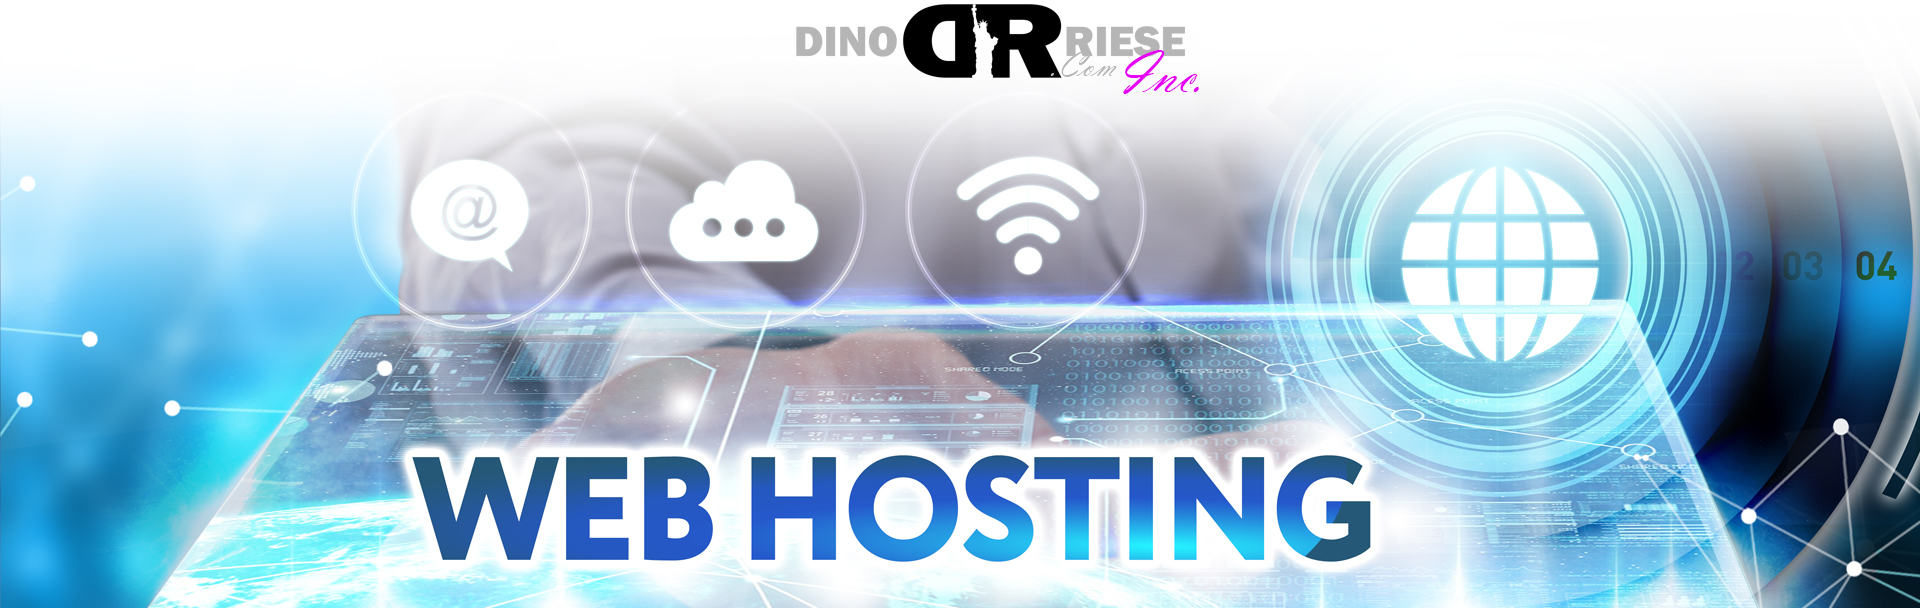 Web Hosting Professional Services | DinoRiese.com Inc. - Image